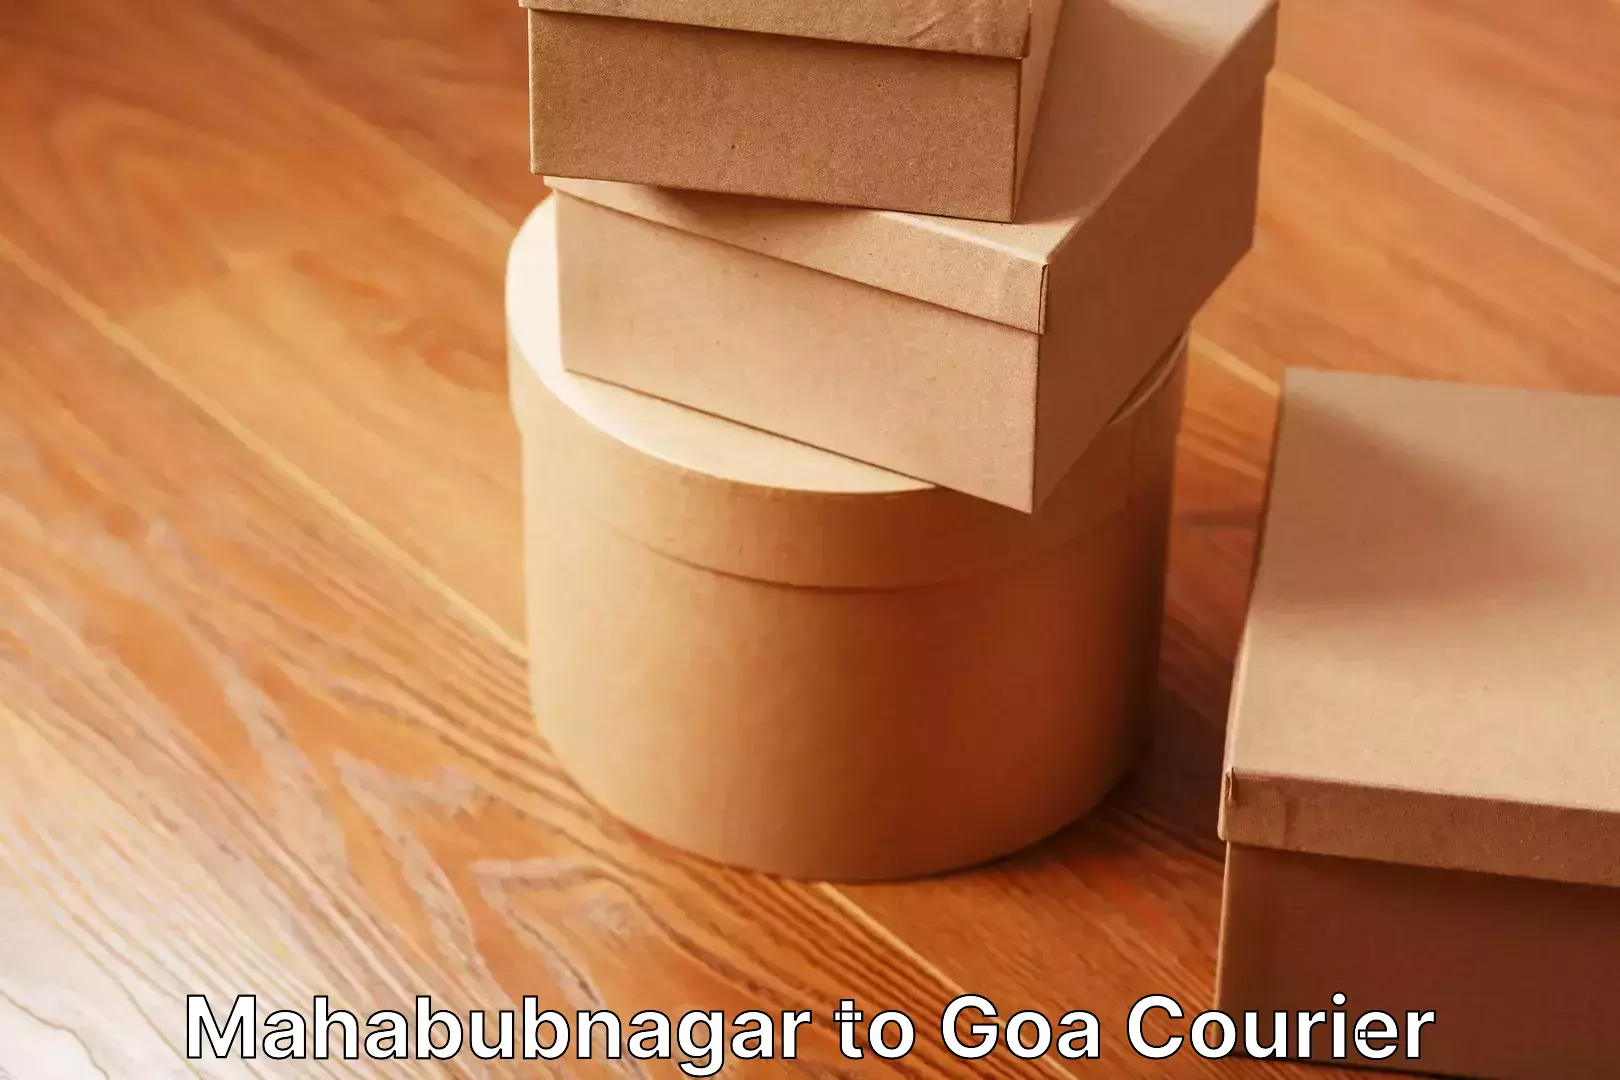 Trusted relocation experts Mahabubnagar to Goa